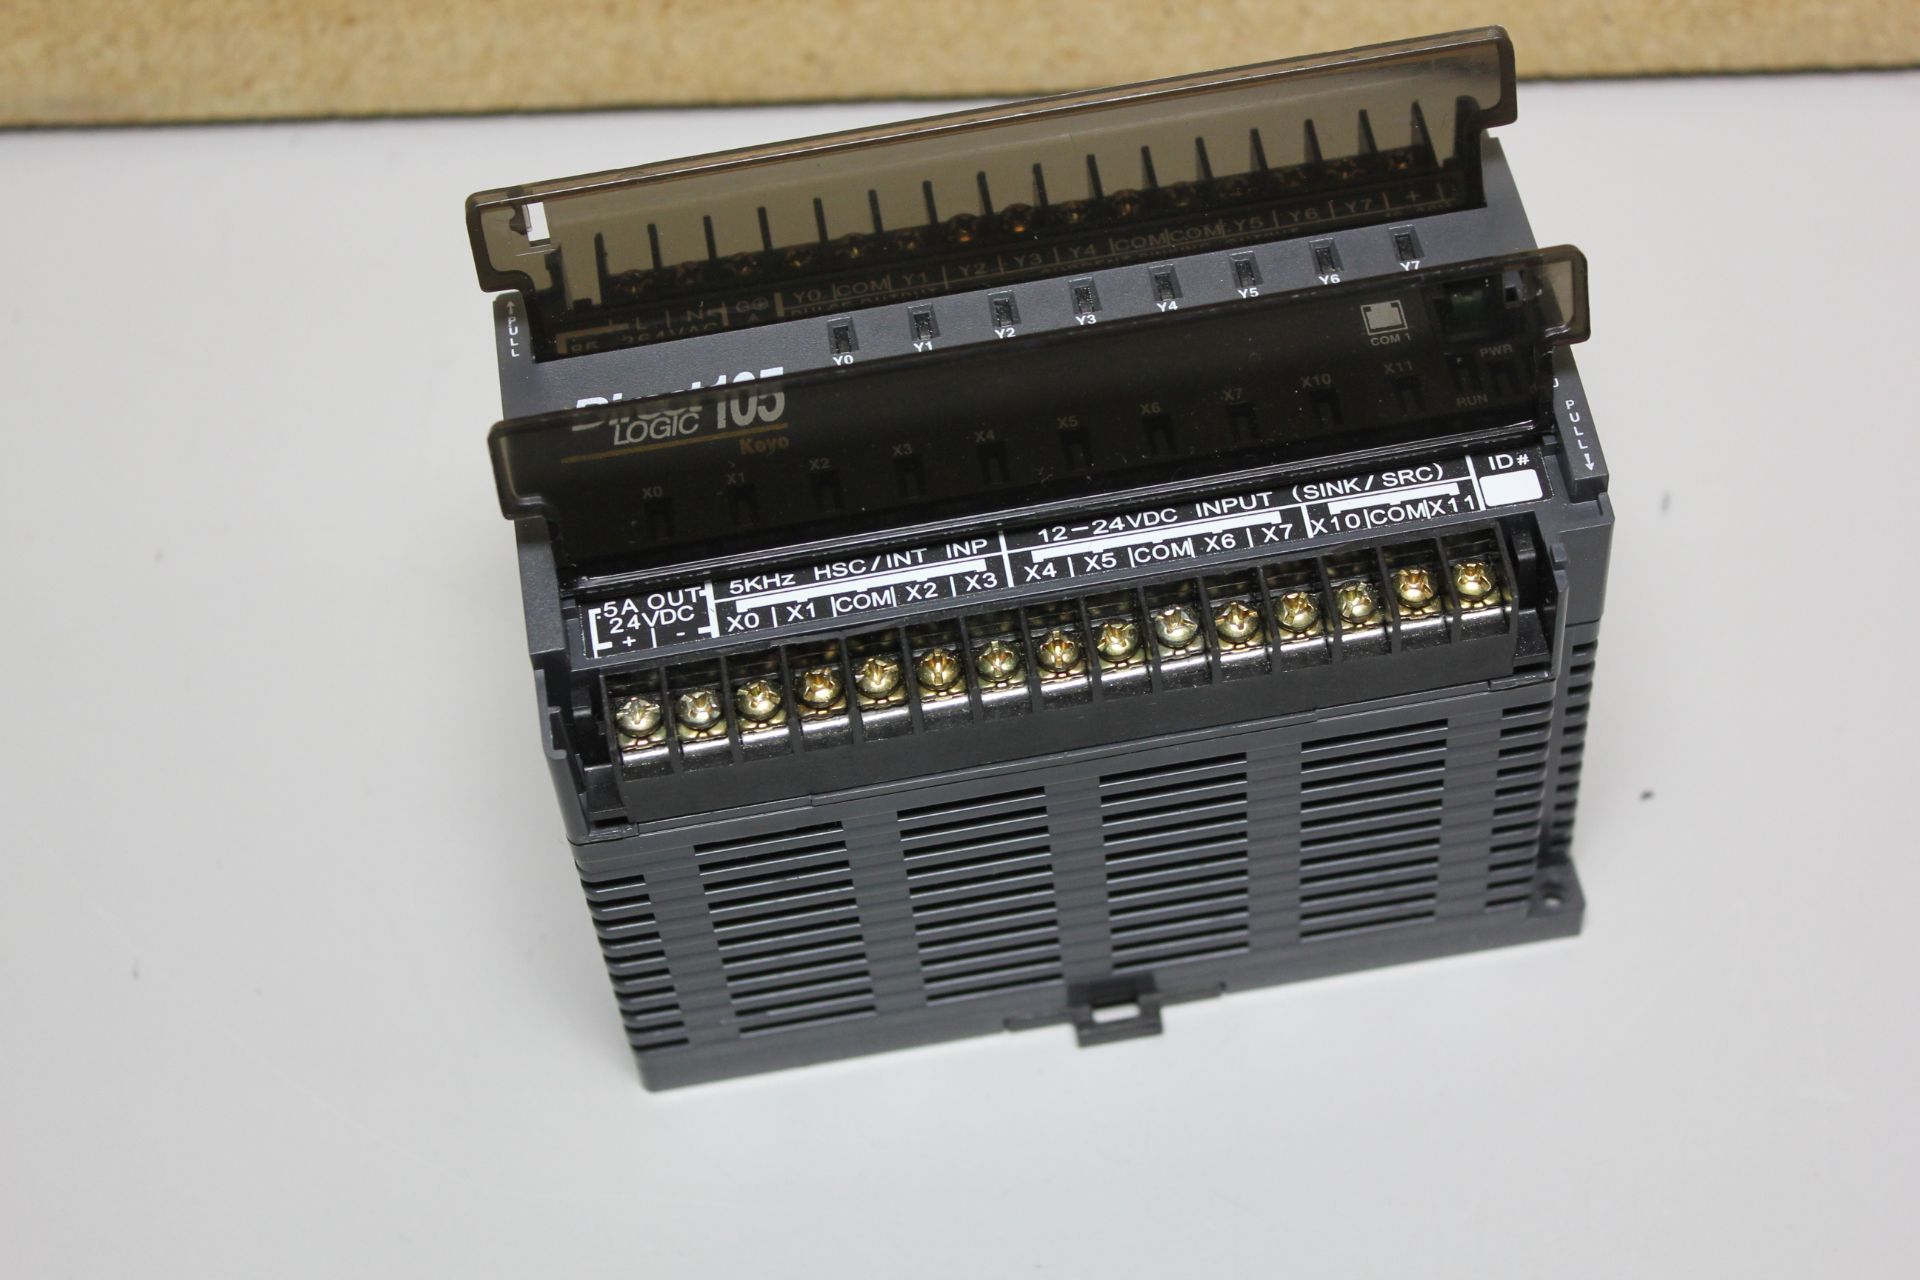 KOYO DIRECT LOGIC 105 PLC CPU CONTROLLER - Image 2 of 4